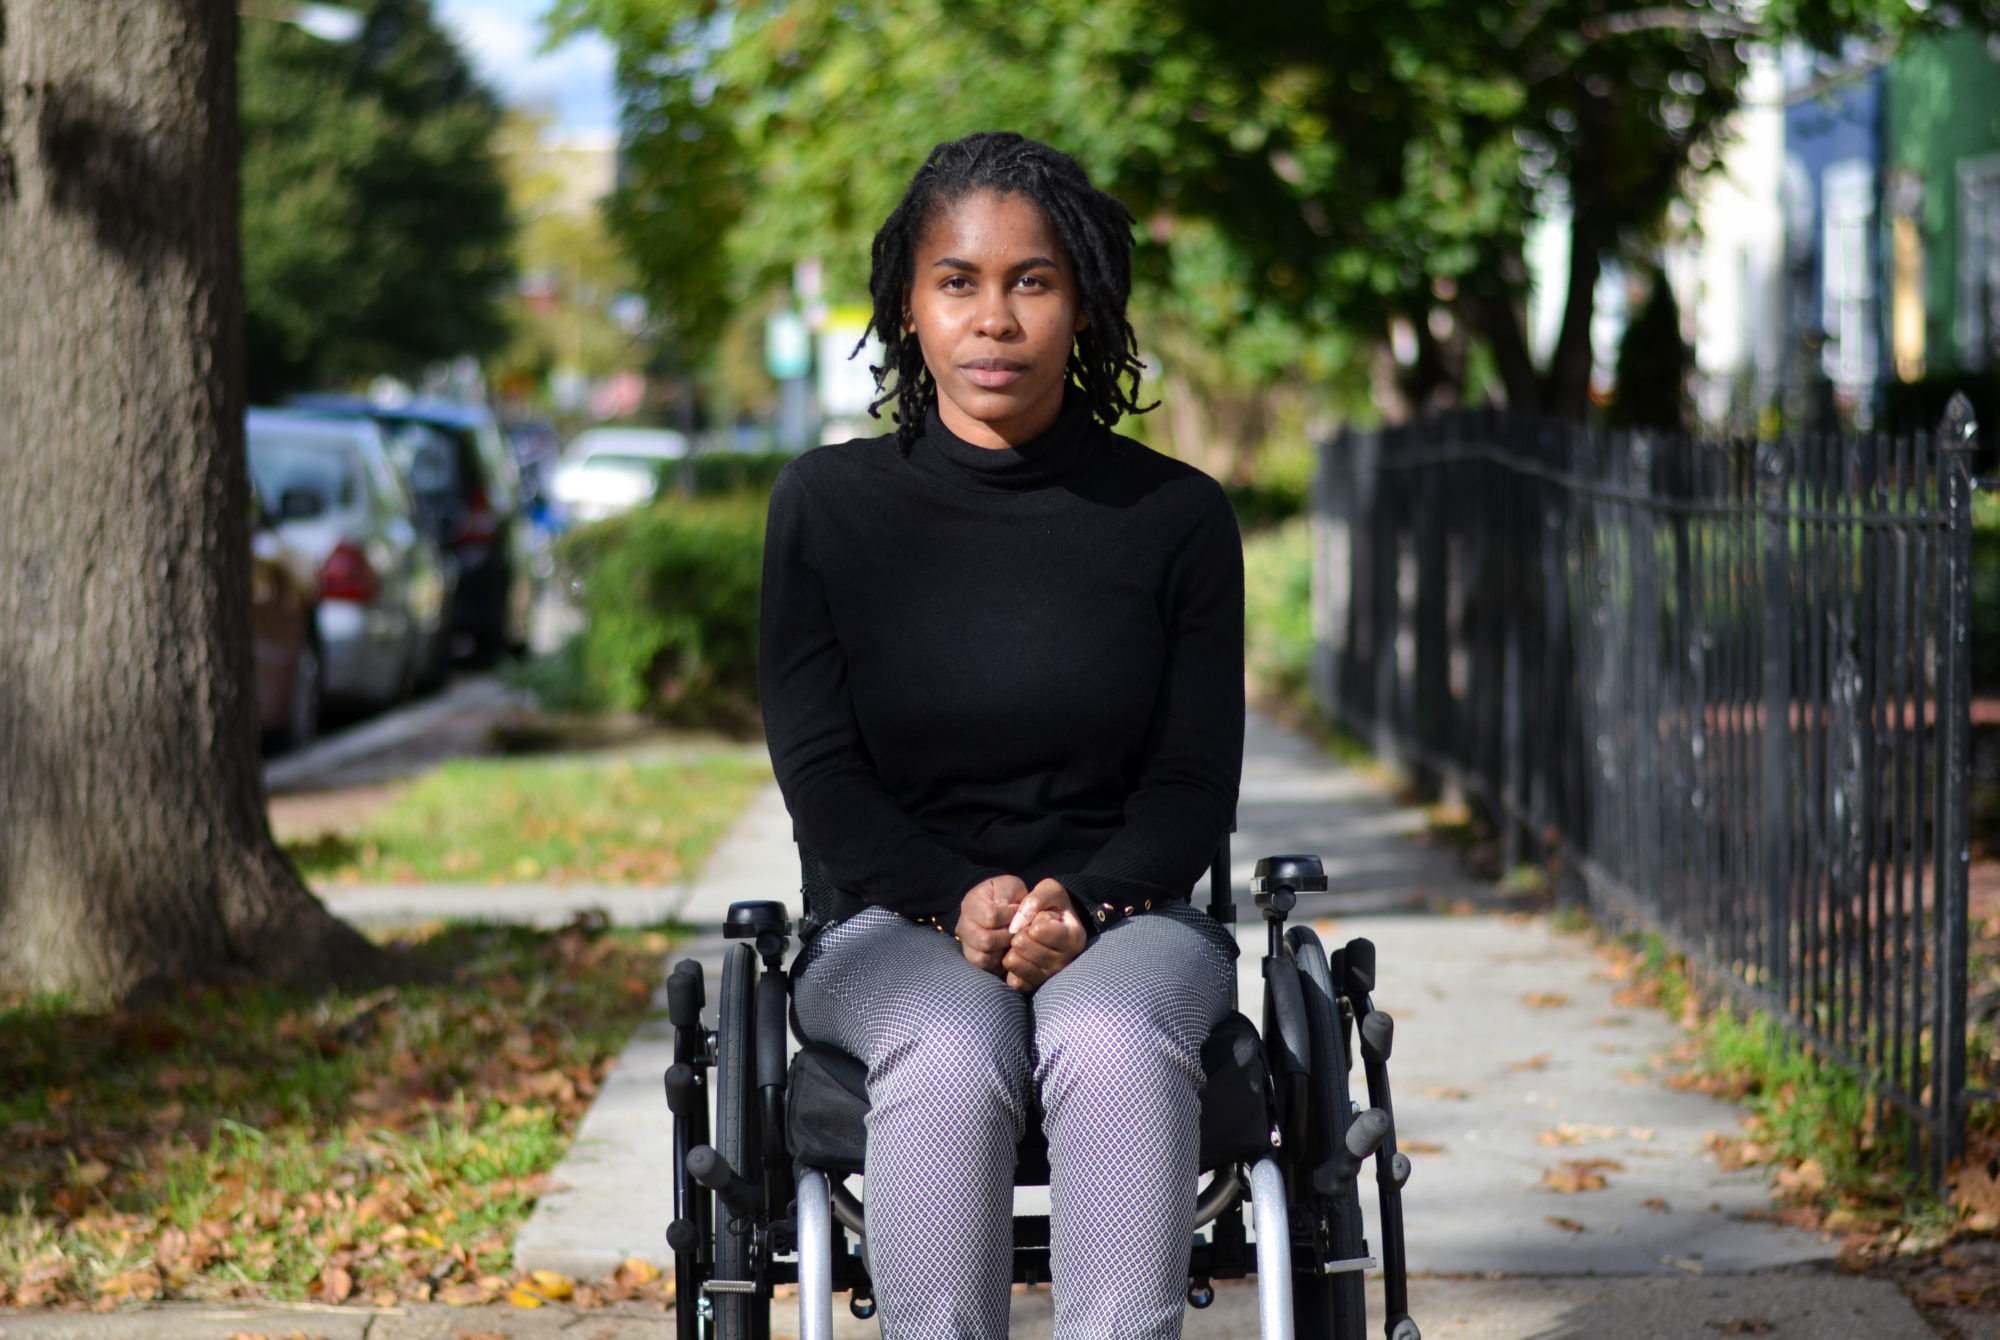 Alumna Tyree Brown sitting in her wheelchair on the sidewalk.